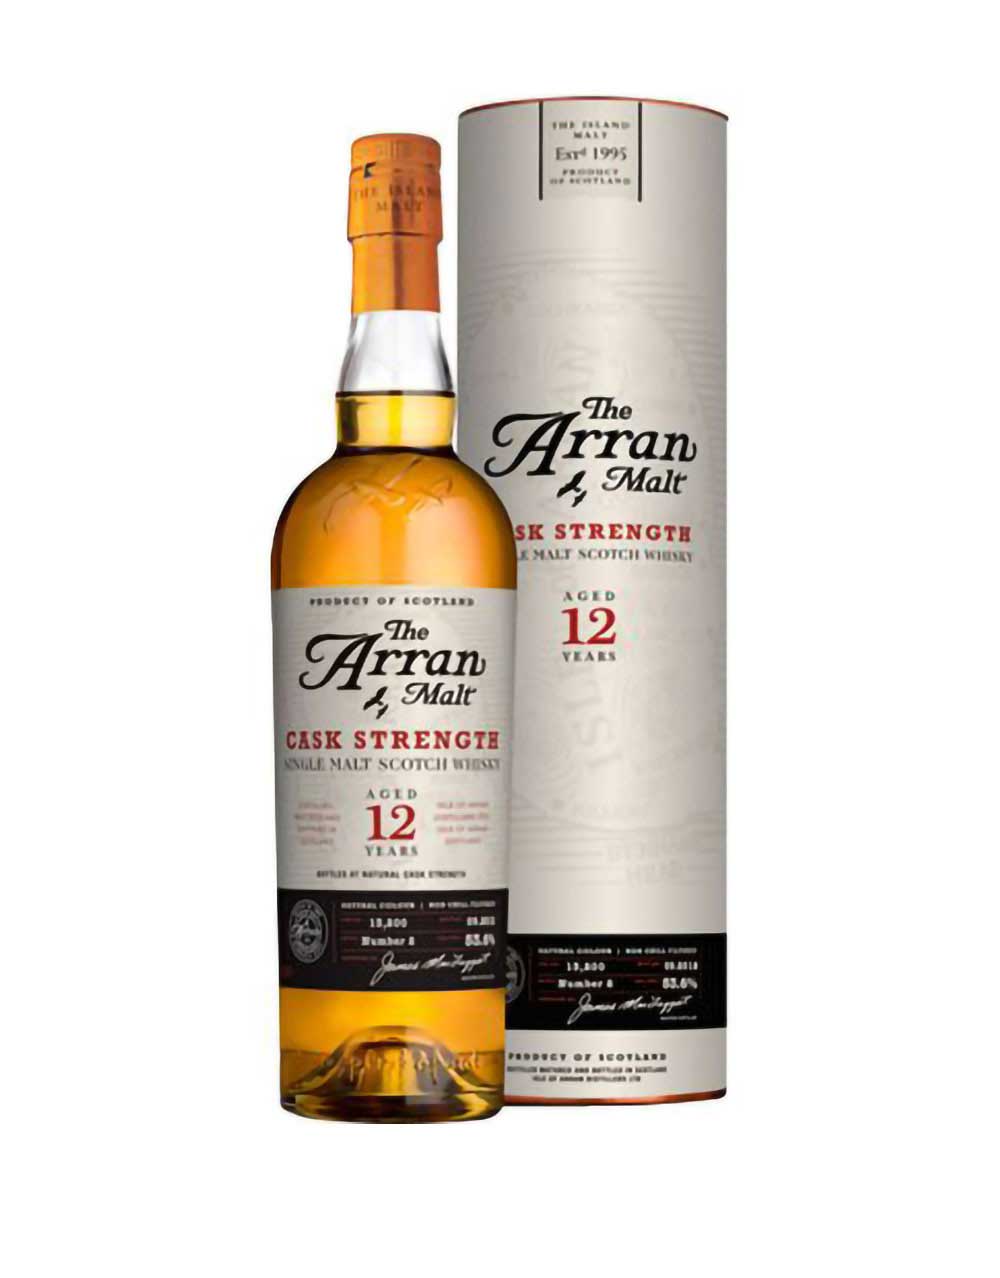 The Arran 12 Year Old Cask Strength Single Malt Scotch Whisky